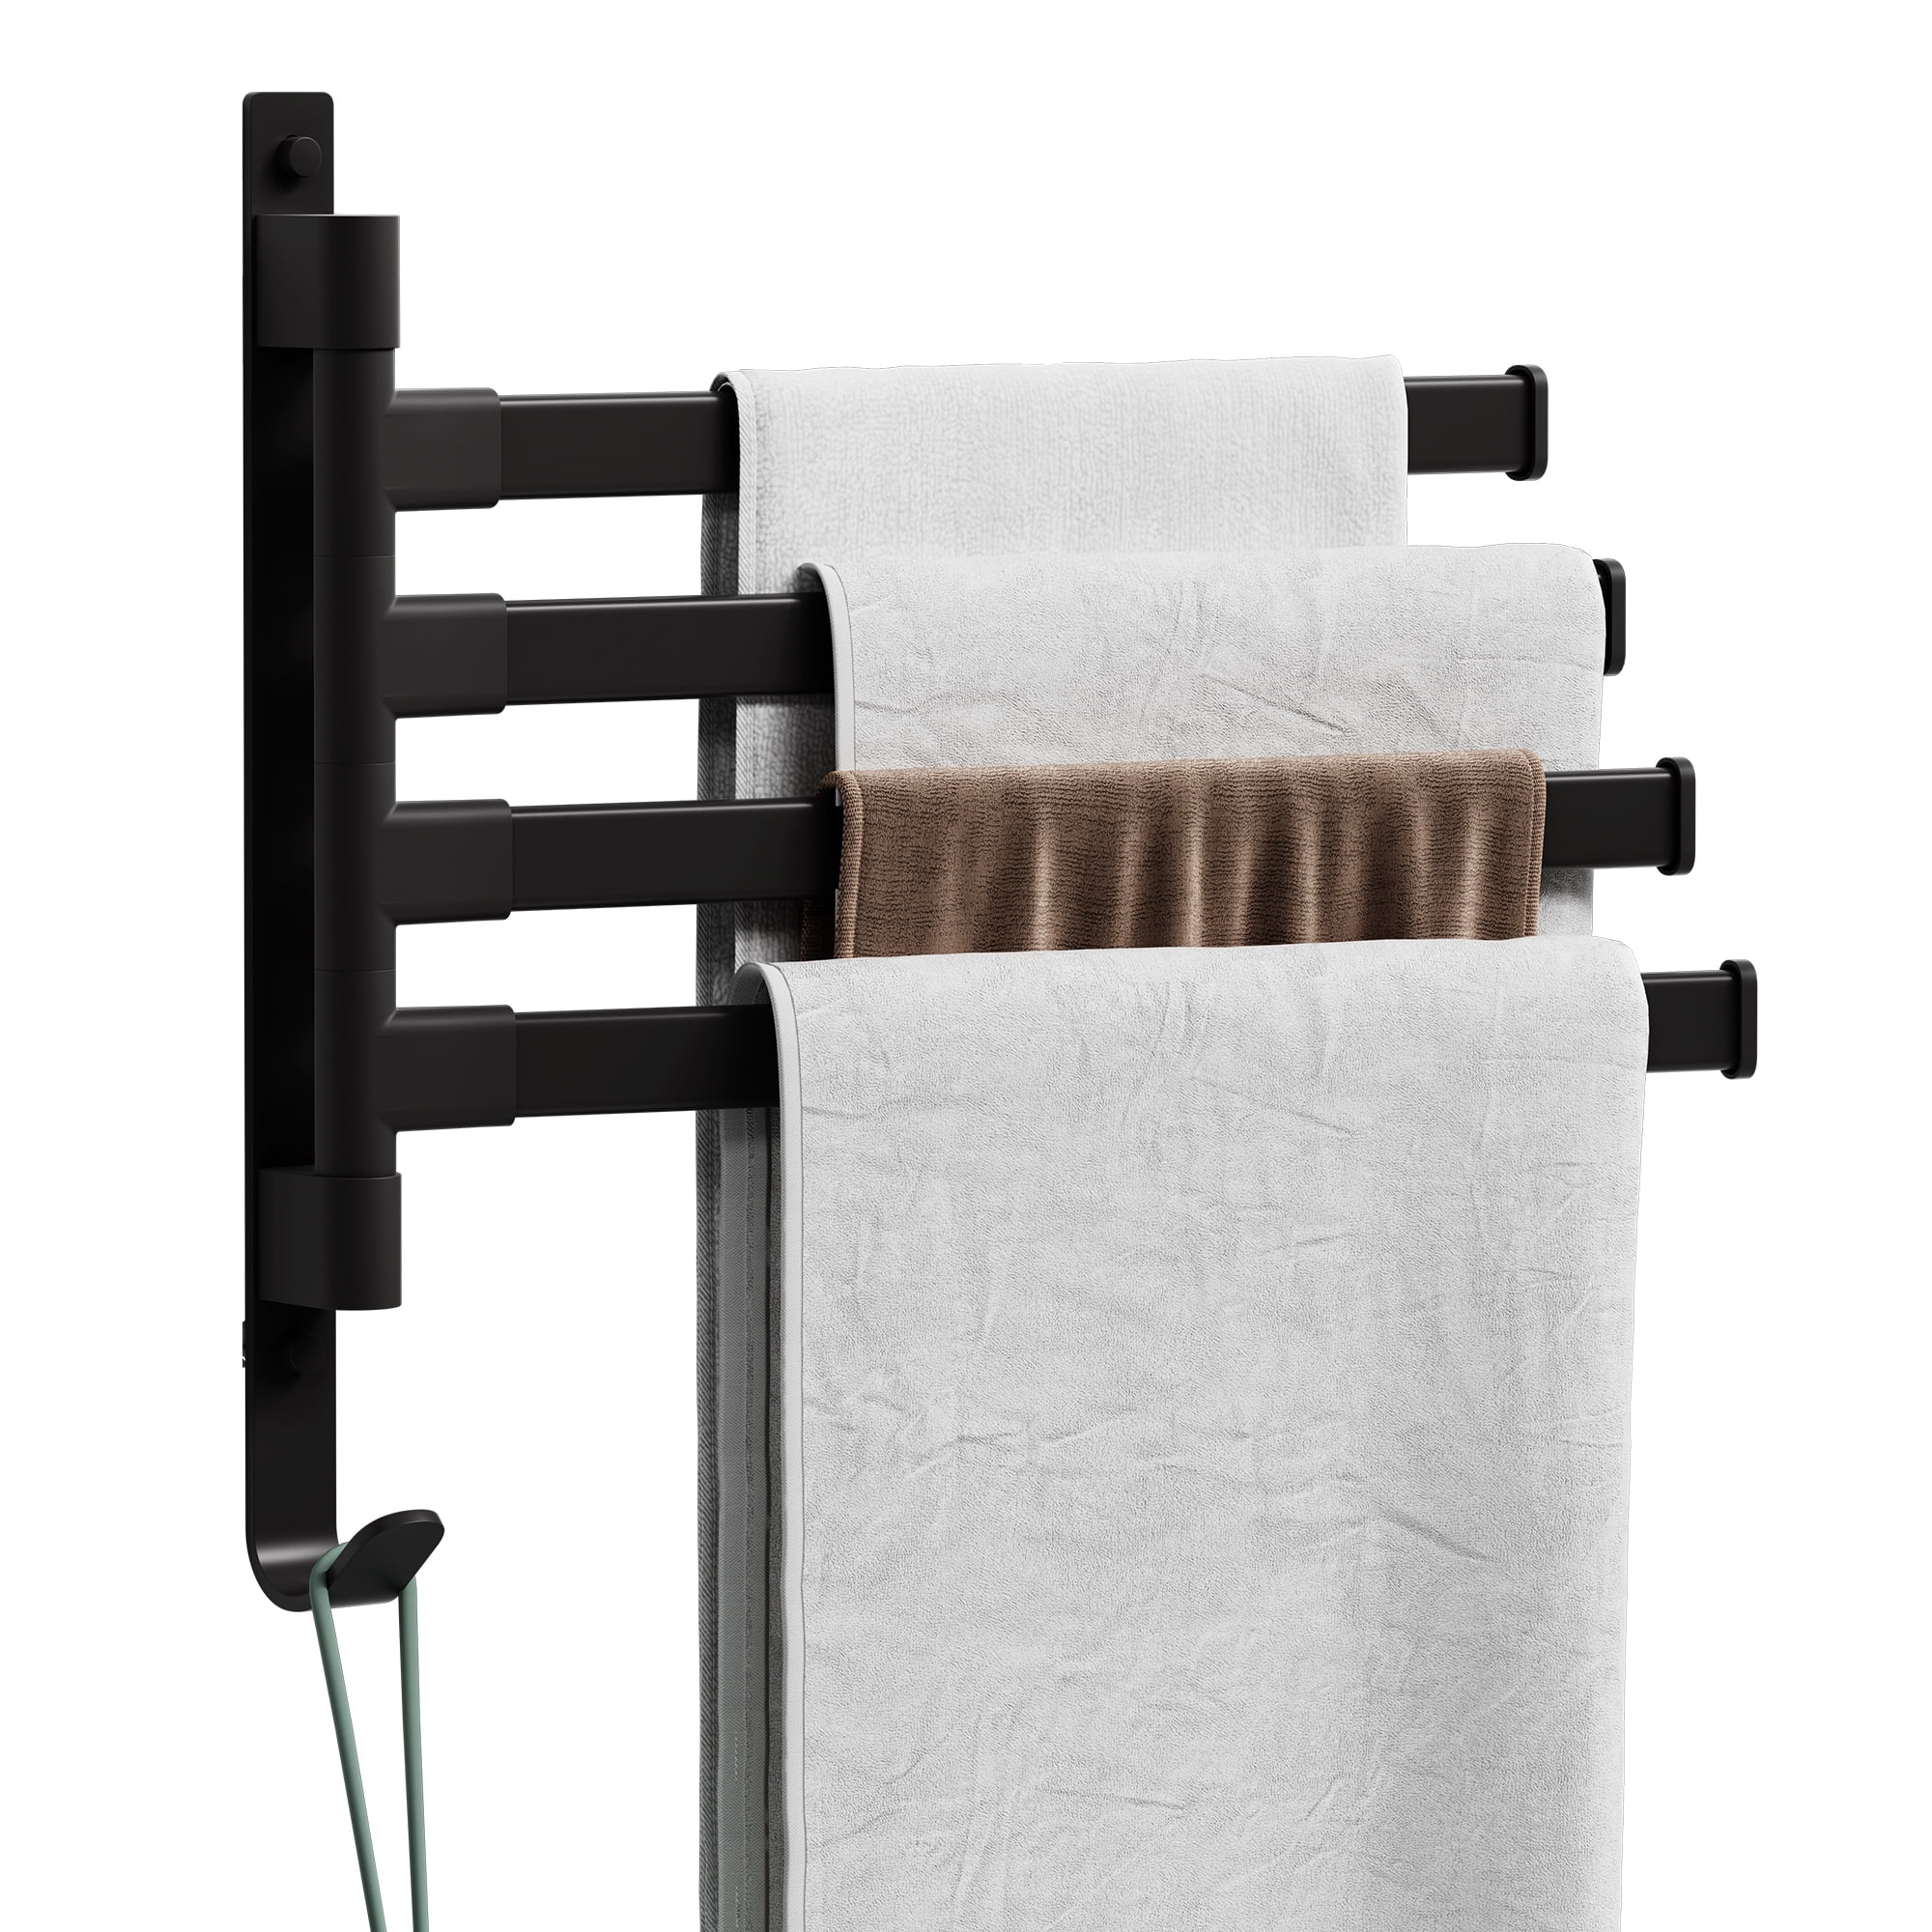 ROBOT-GXG Towel Rack Swing Arm - 24cm/9.44 inch Swivel Towel Bar 3-Arm  Bathroom Towel Holder Wall-Mounted Wall Mounted Hand Towel Rack Holder  Space